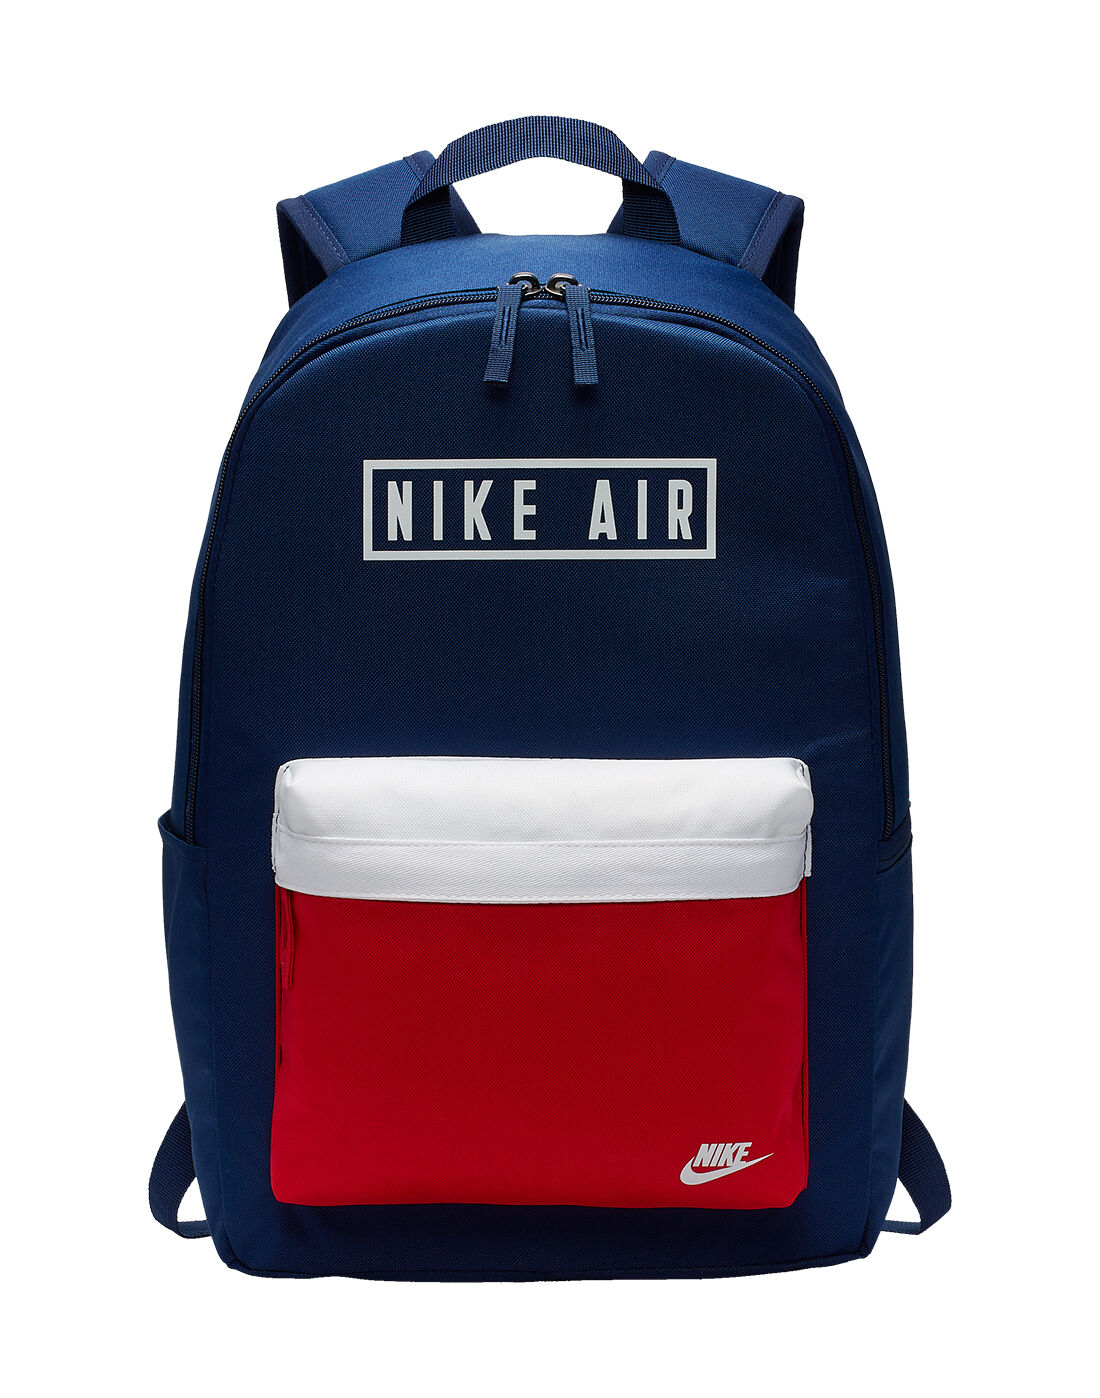 Nike Air Colour Block Backpack - Navy 